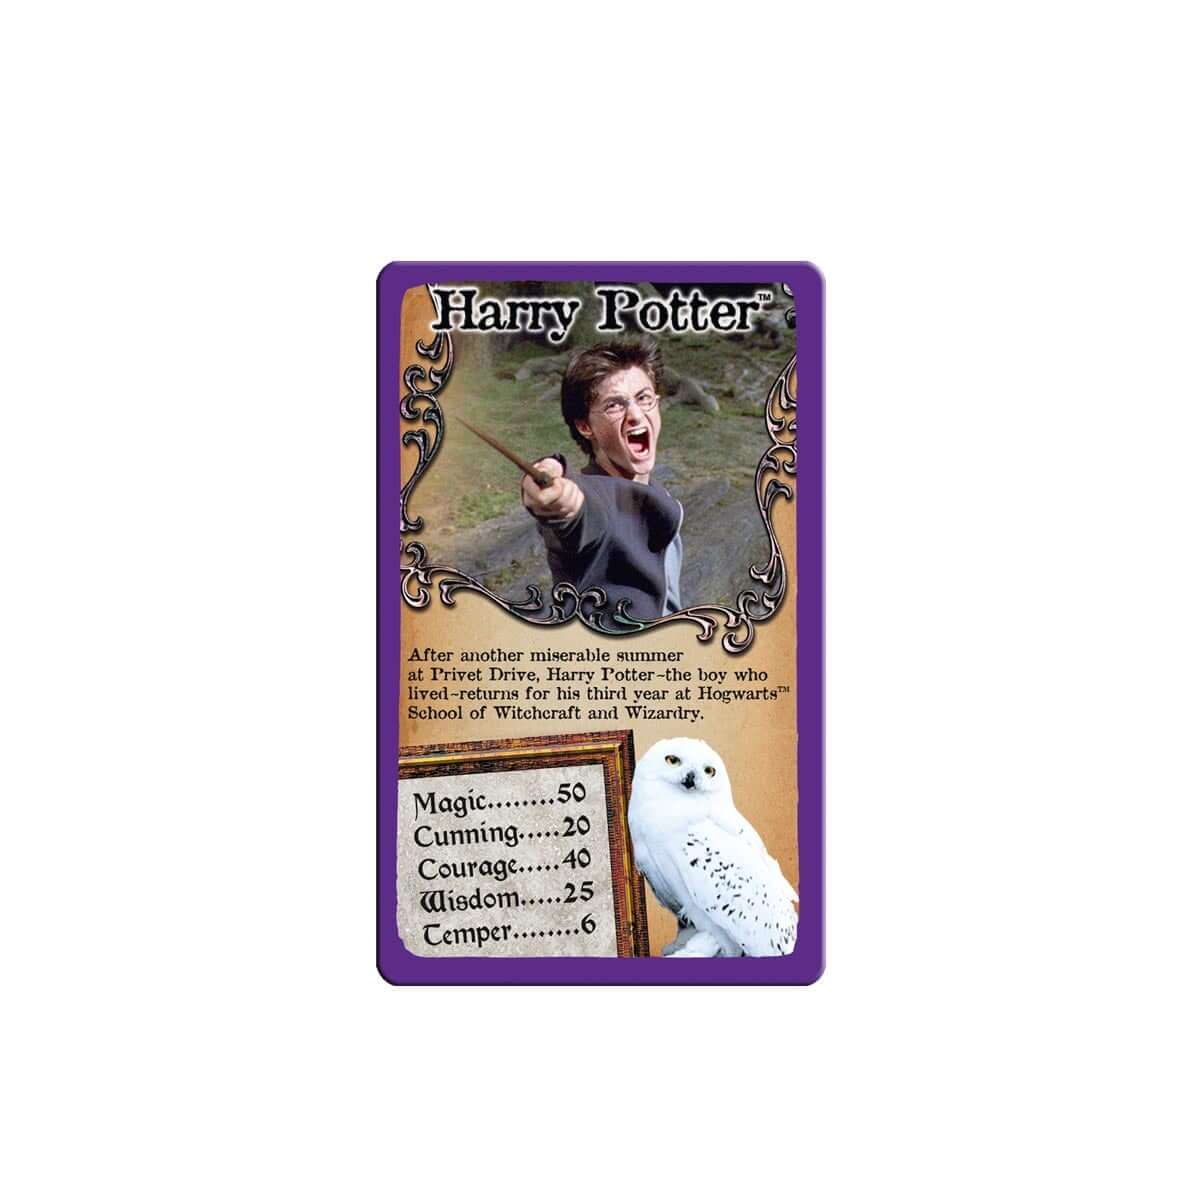 Harry Potter & the Prisoner of Azkaban Top Trumps Card Game